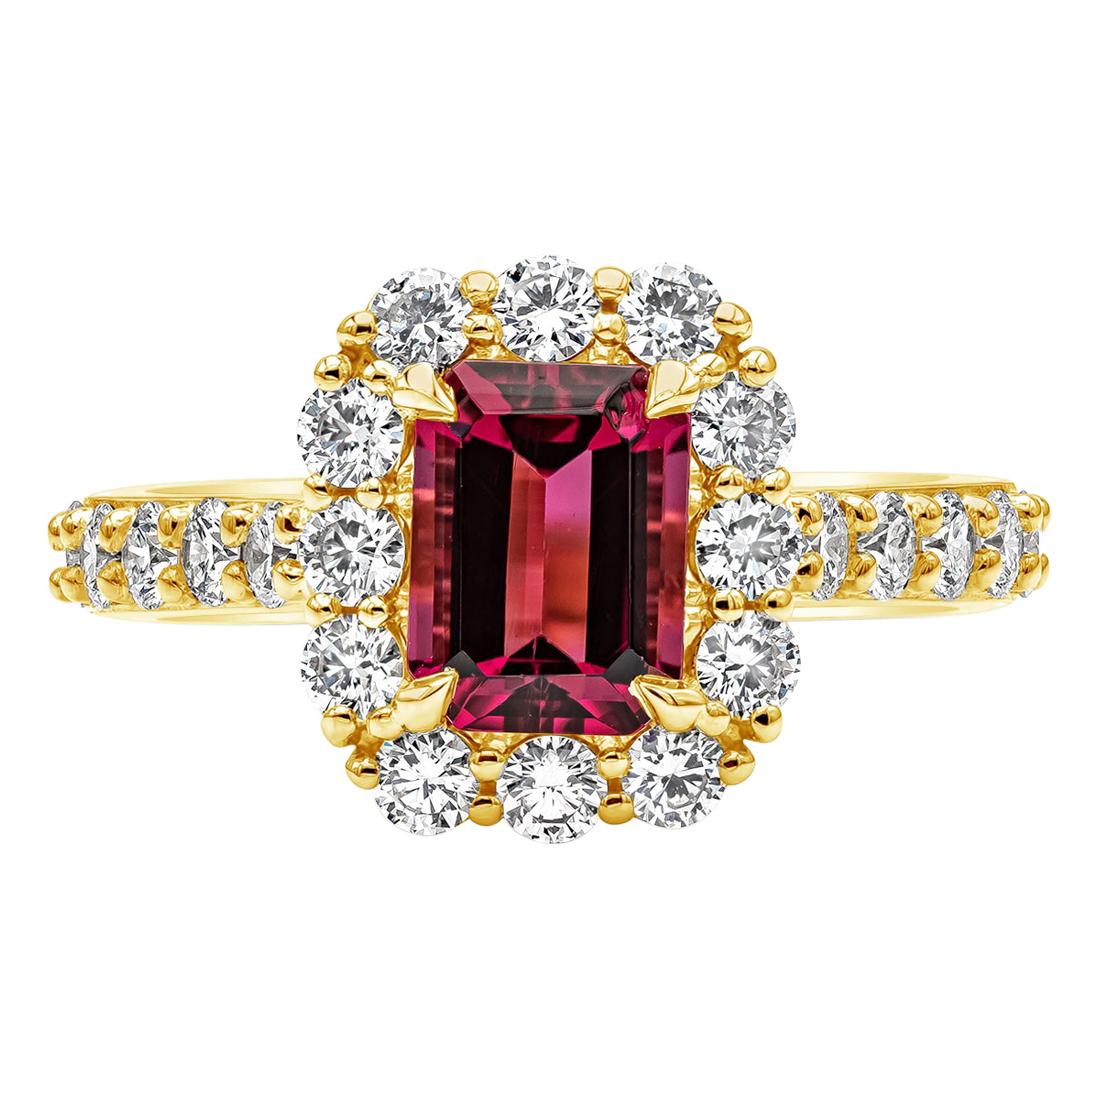 Roman Malakov 1.58 Carats Emerald Cut Rubellite and Diamond Halo Engagement Ring